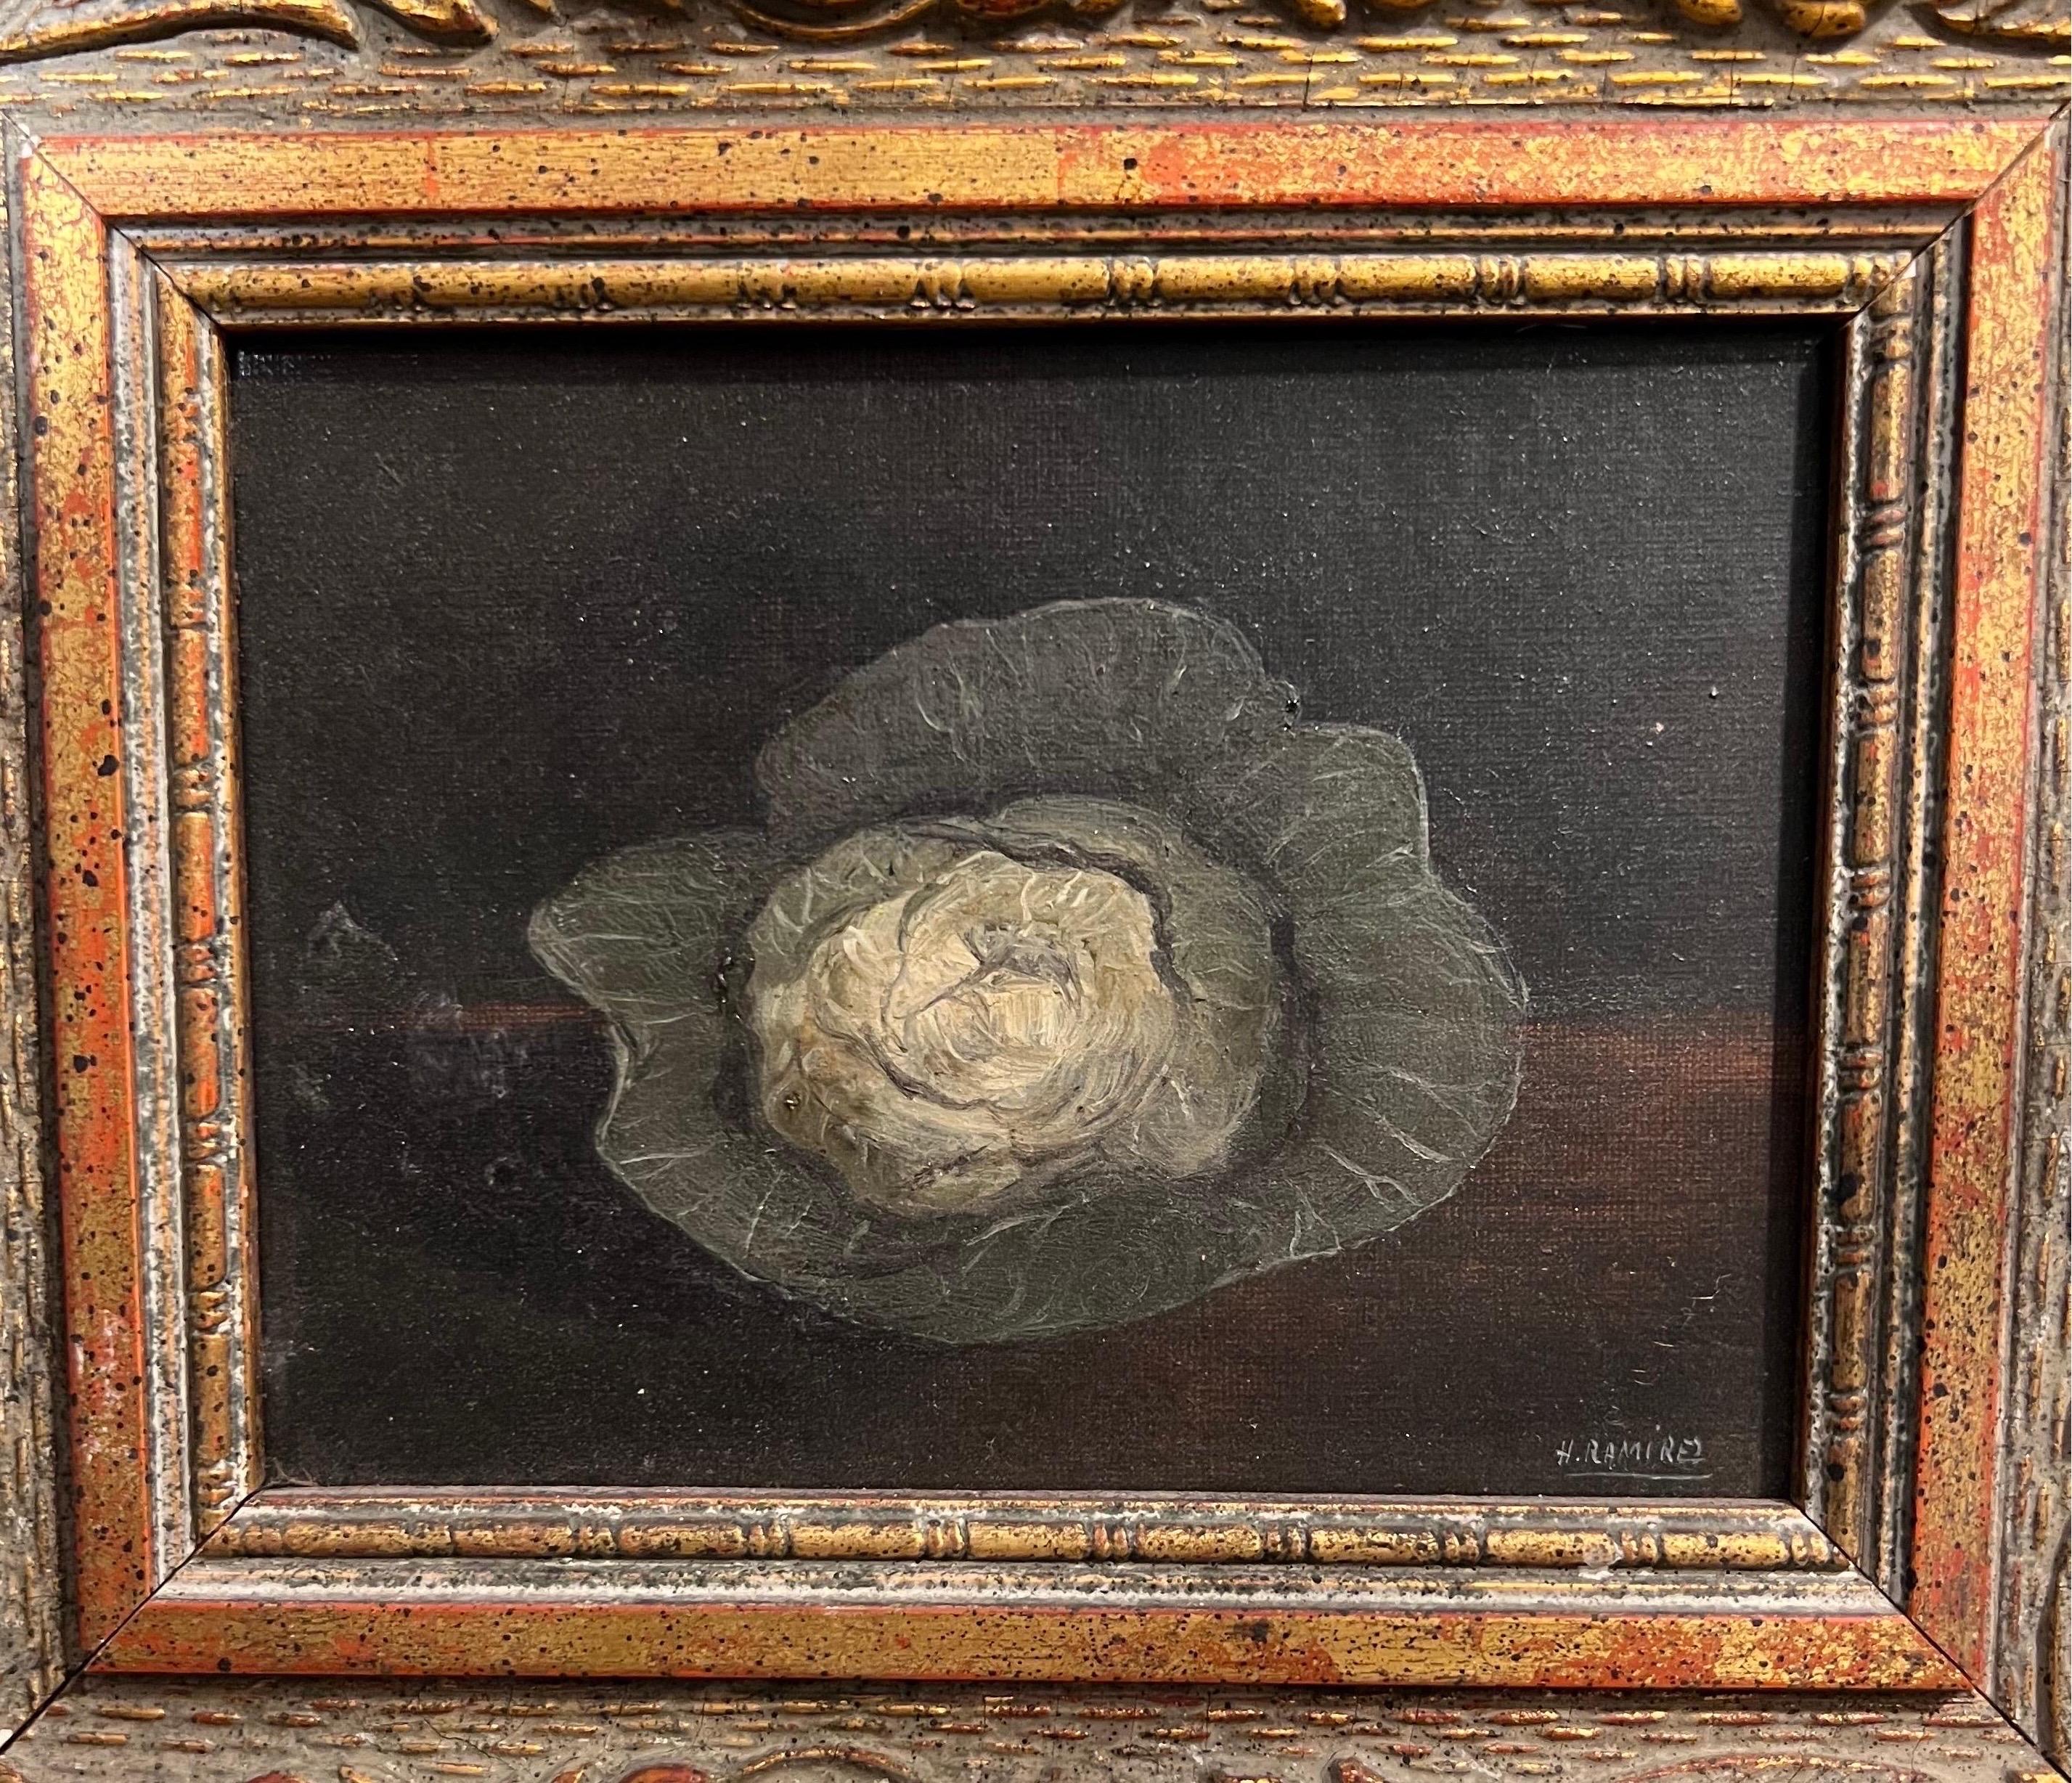 This artwork, a still life “ Cabbage 